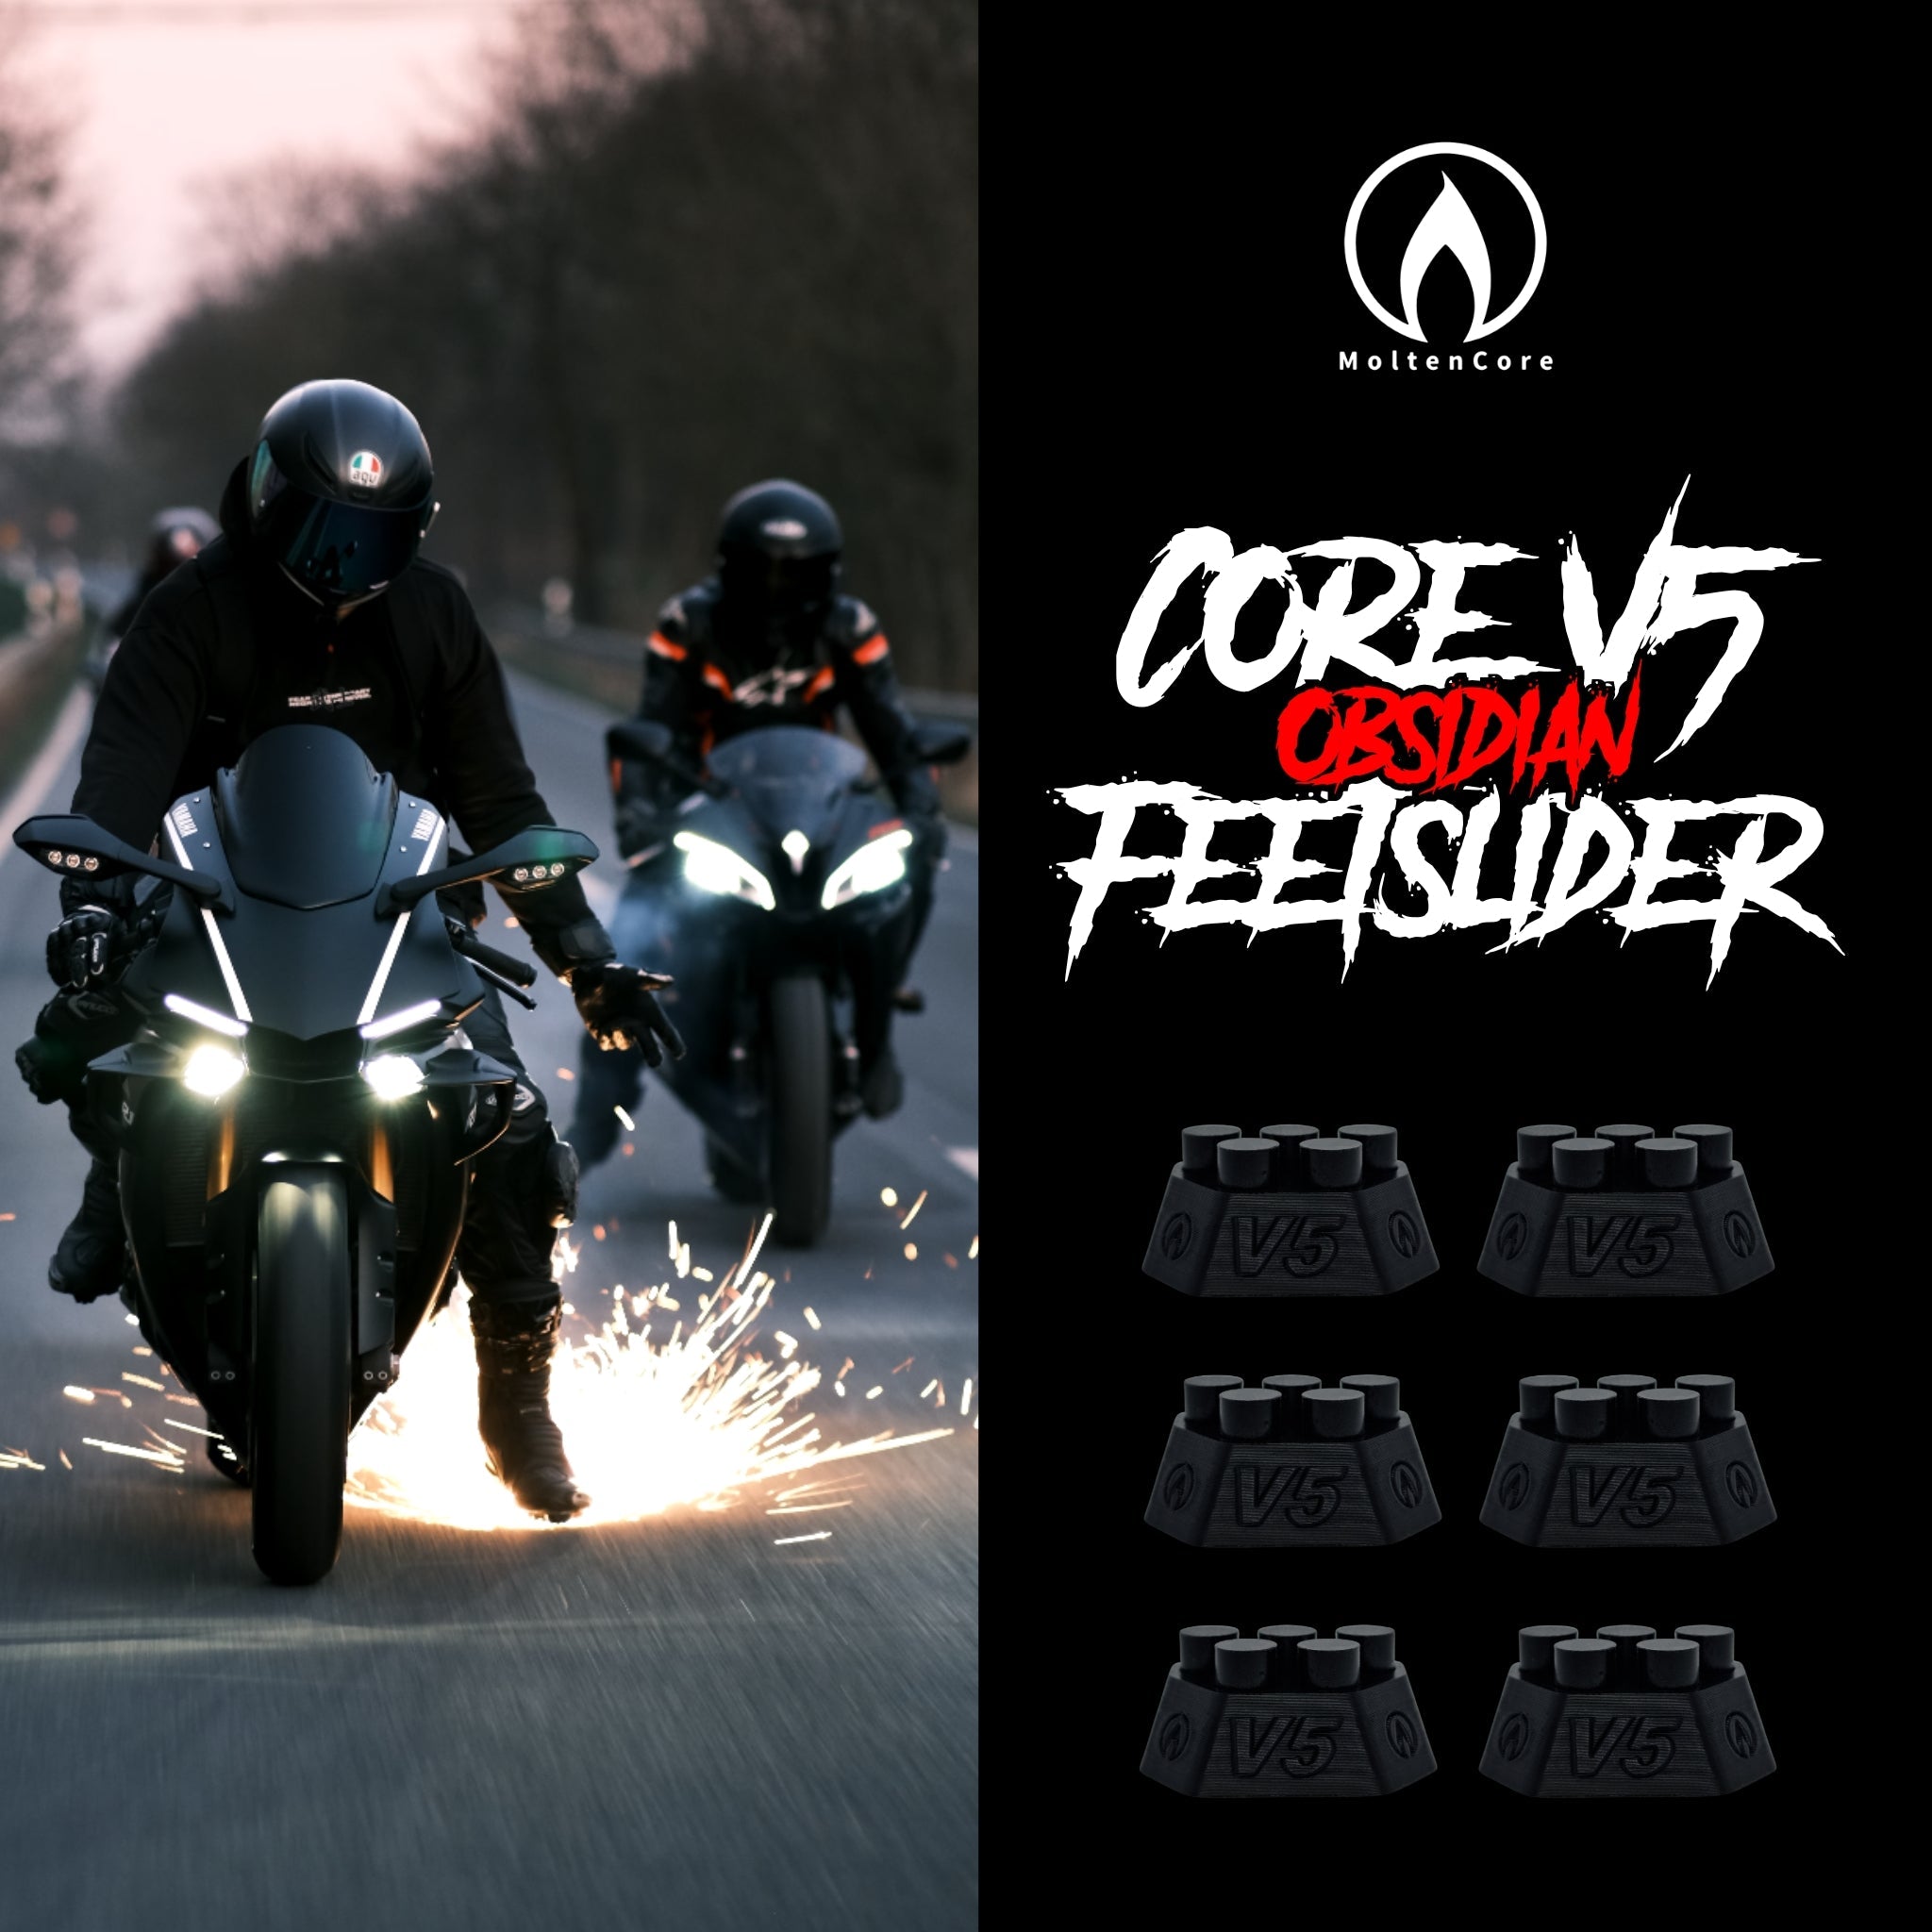 CoreV5 Obsidian Feetslider